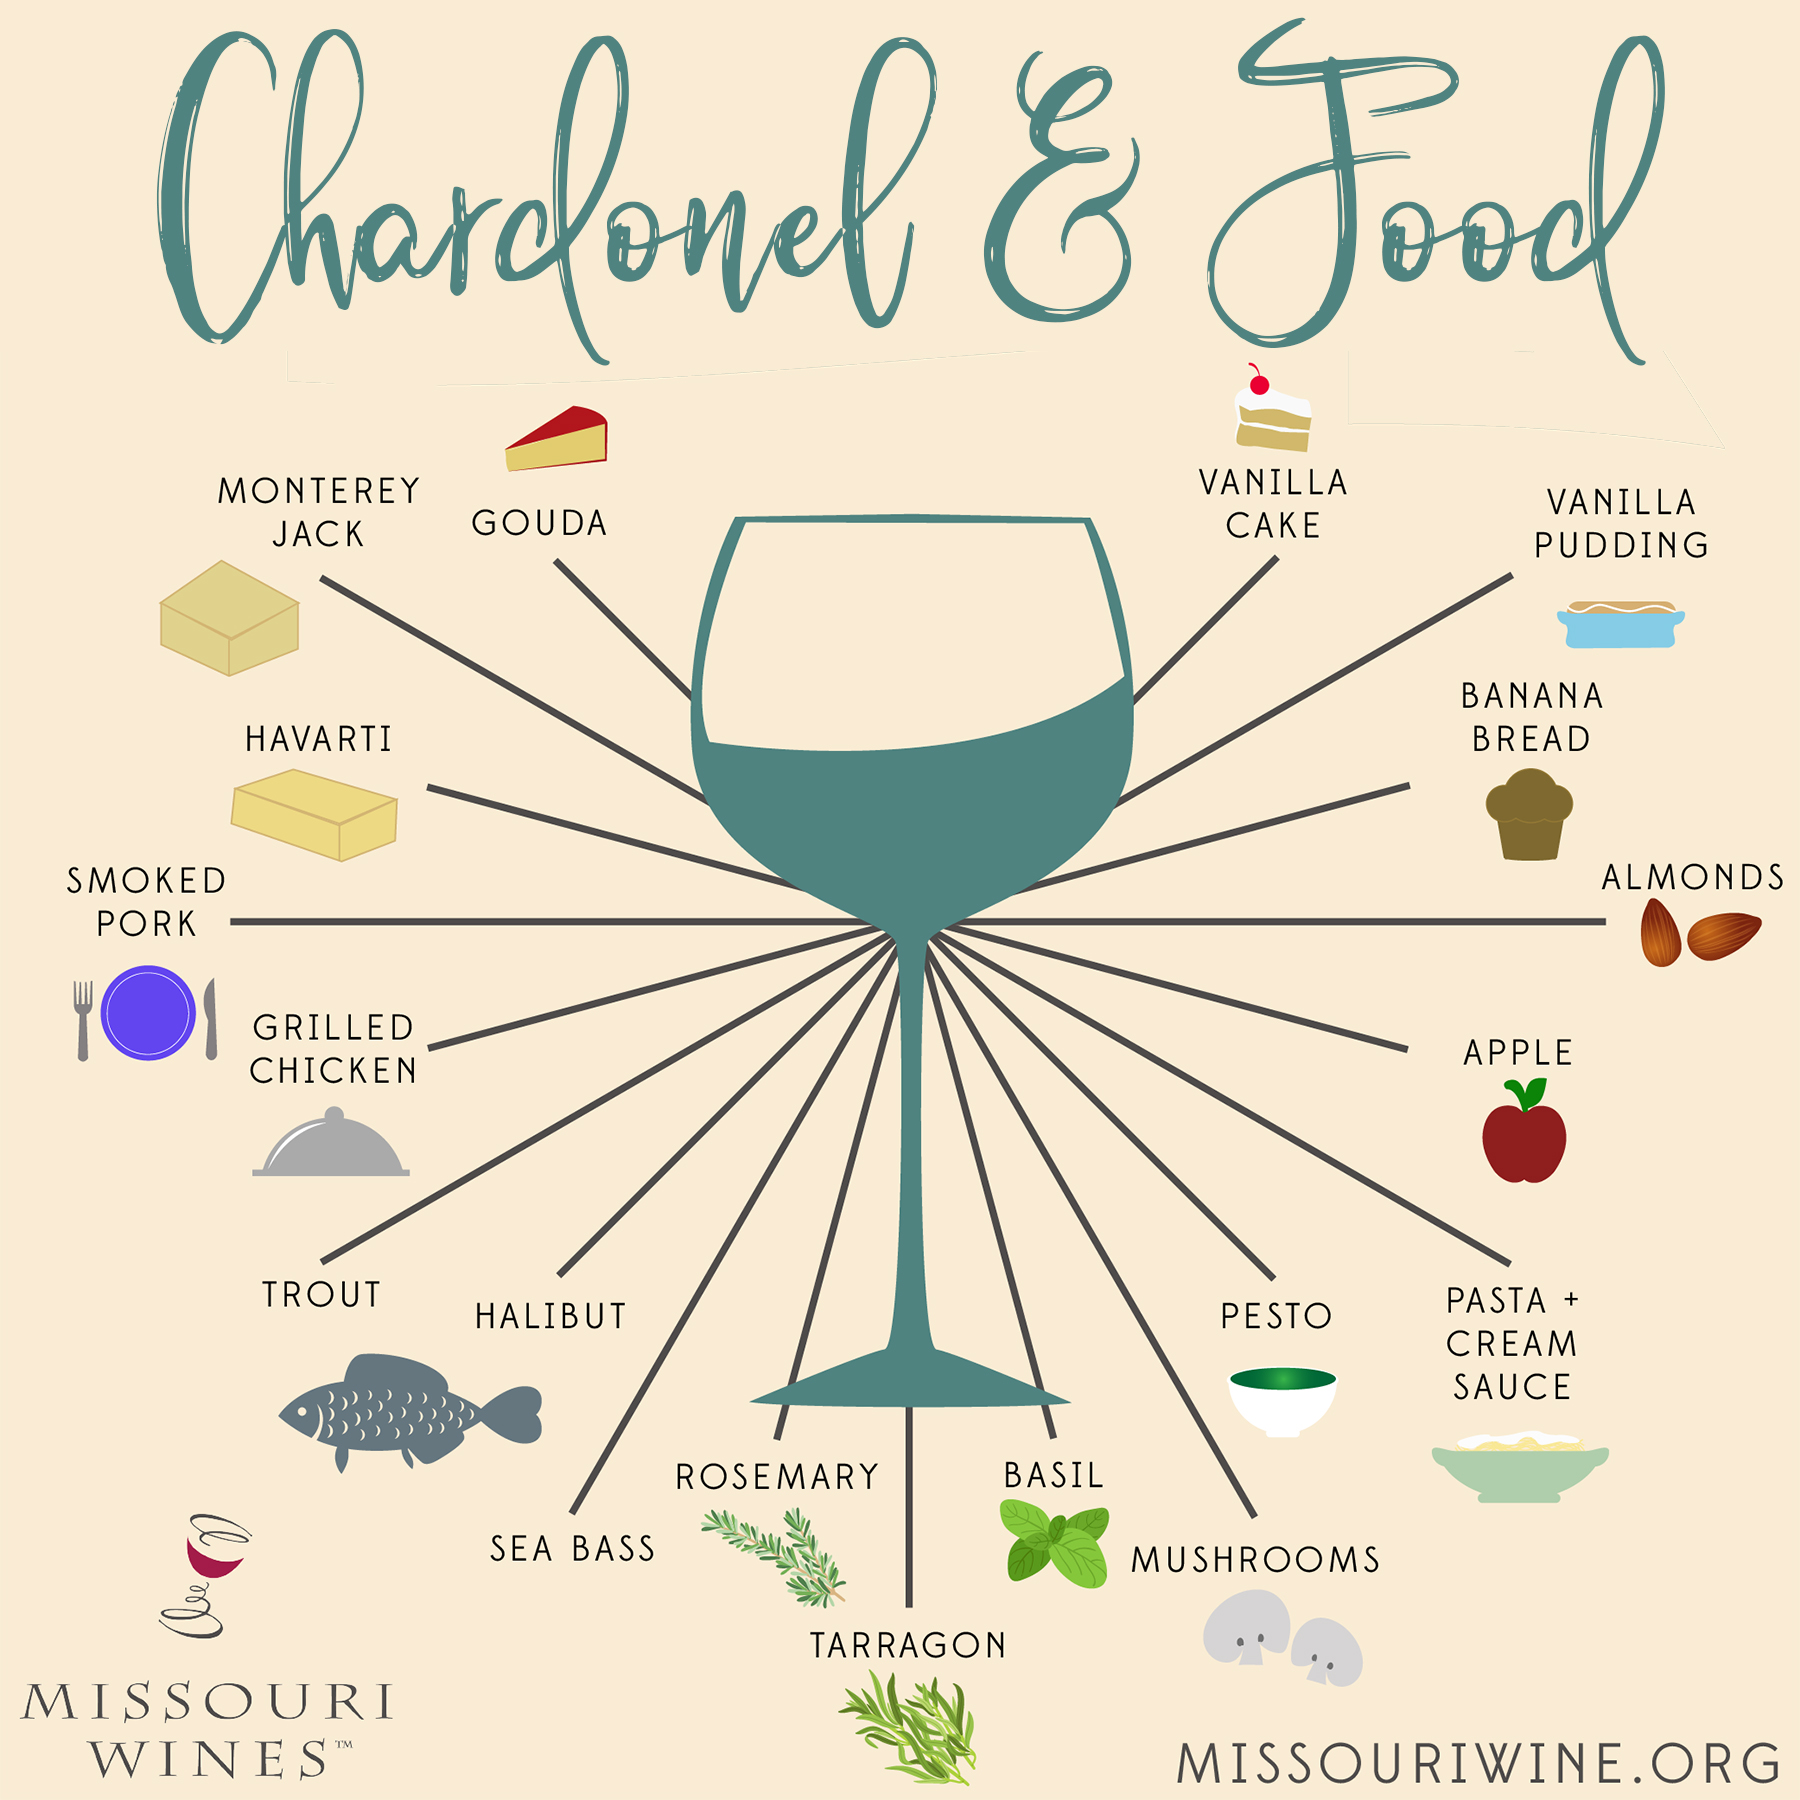 Chardonel and Food